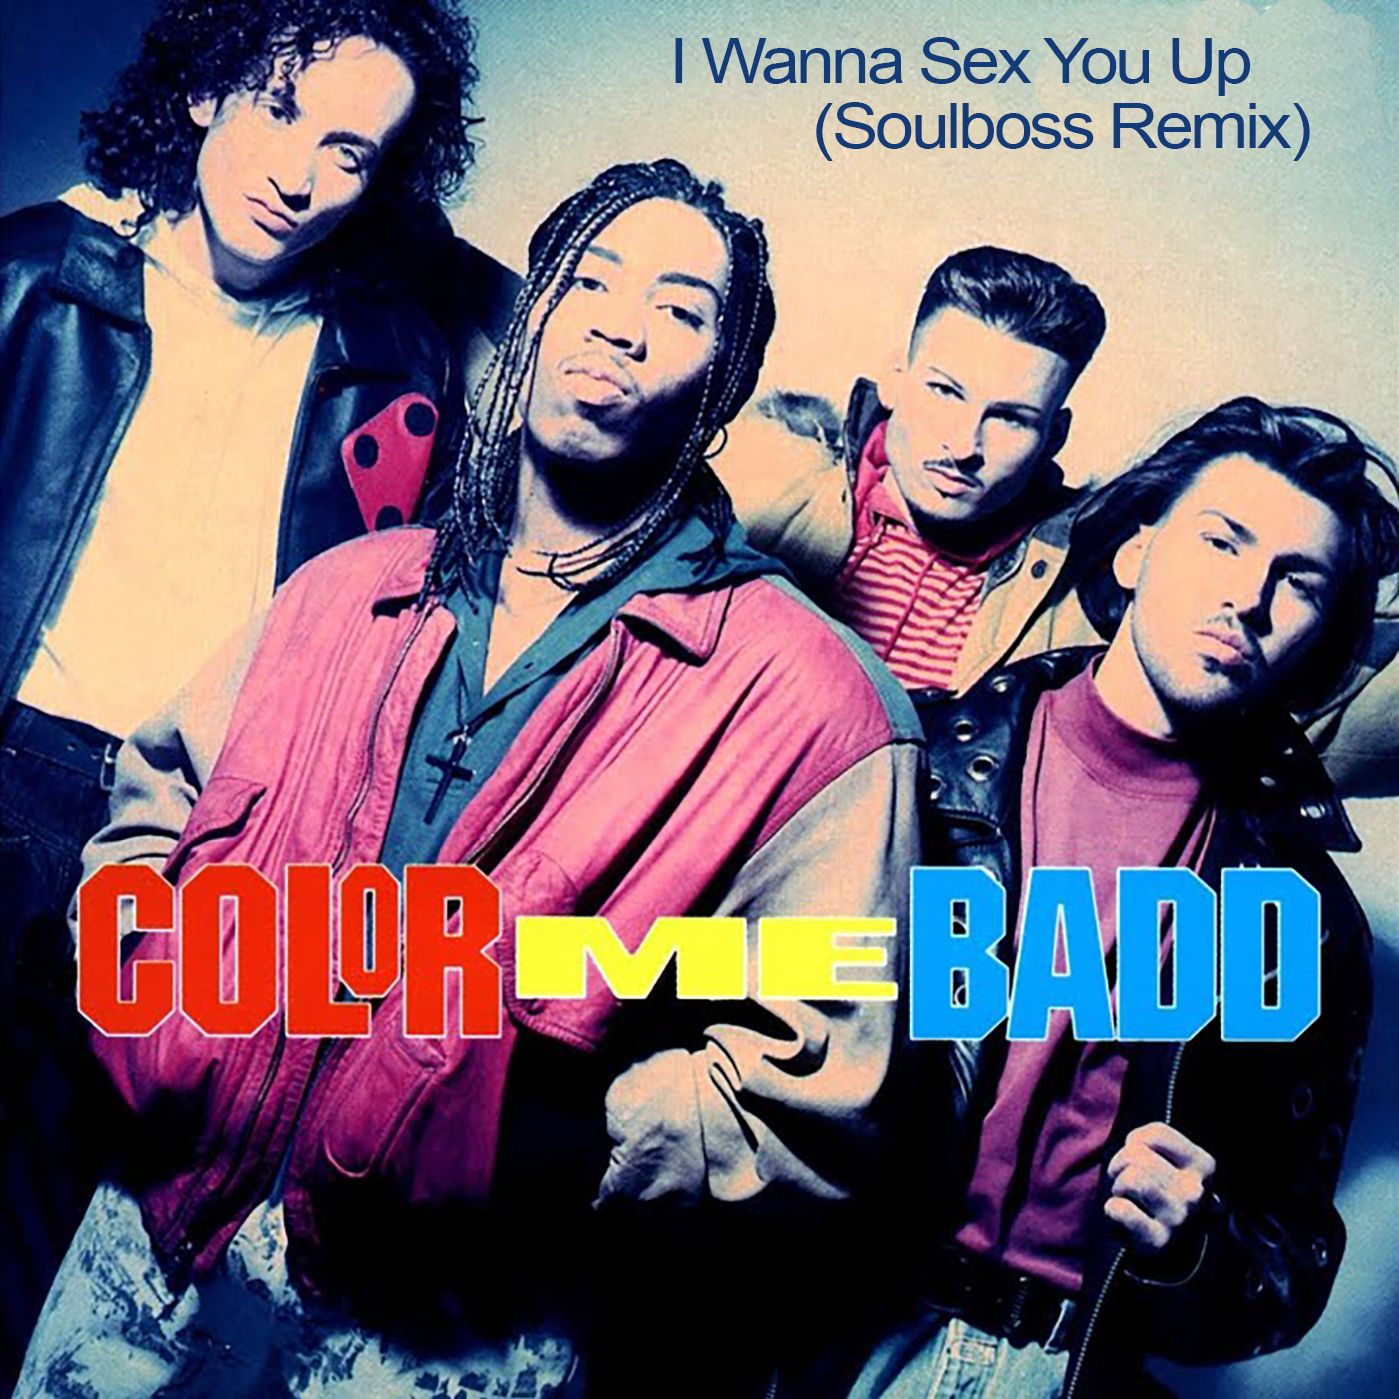 I Wanna Sex You Up (Soulboss Remix) - Color Me Badd